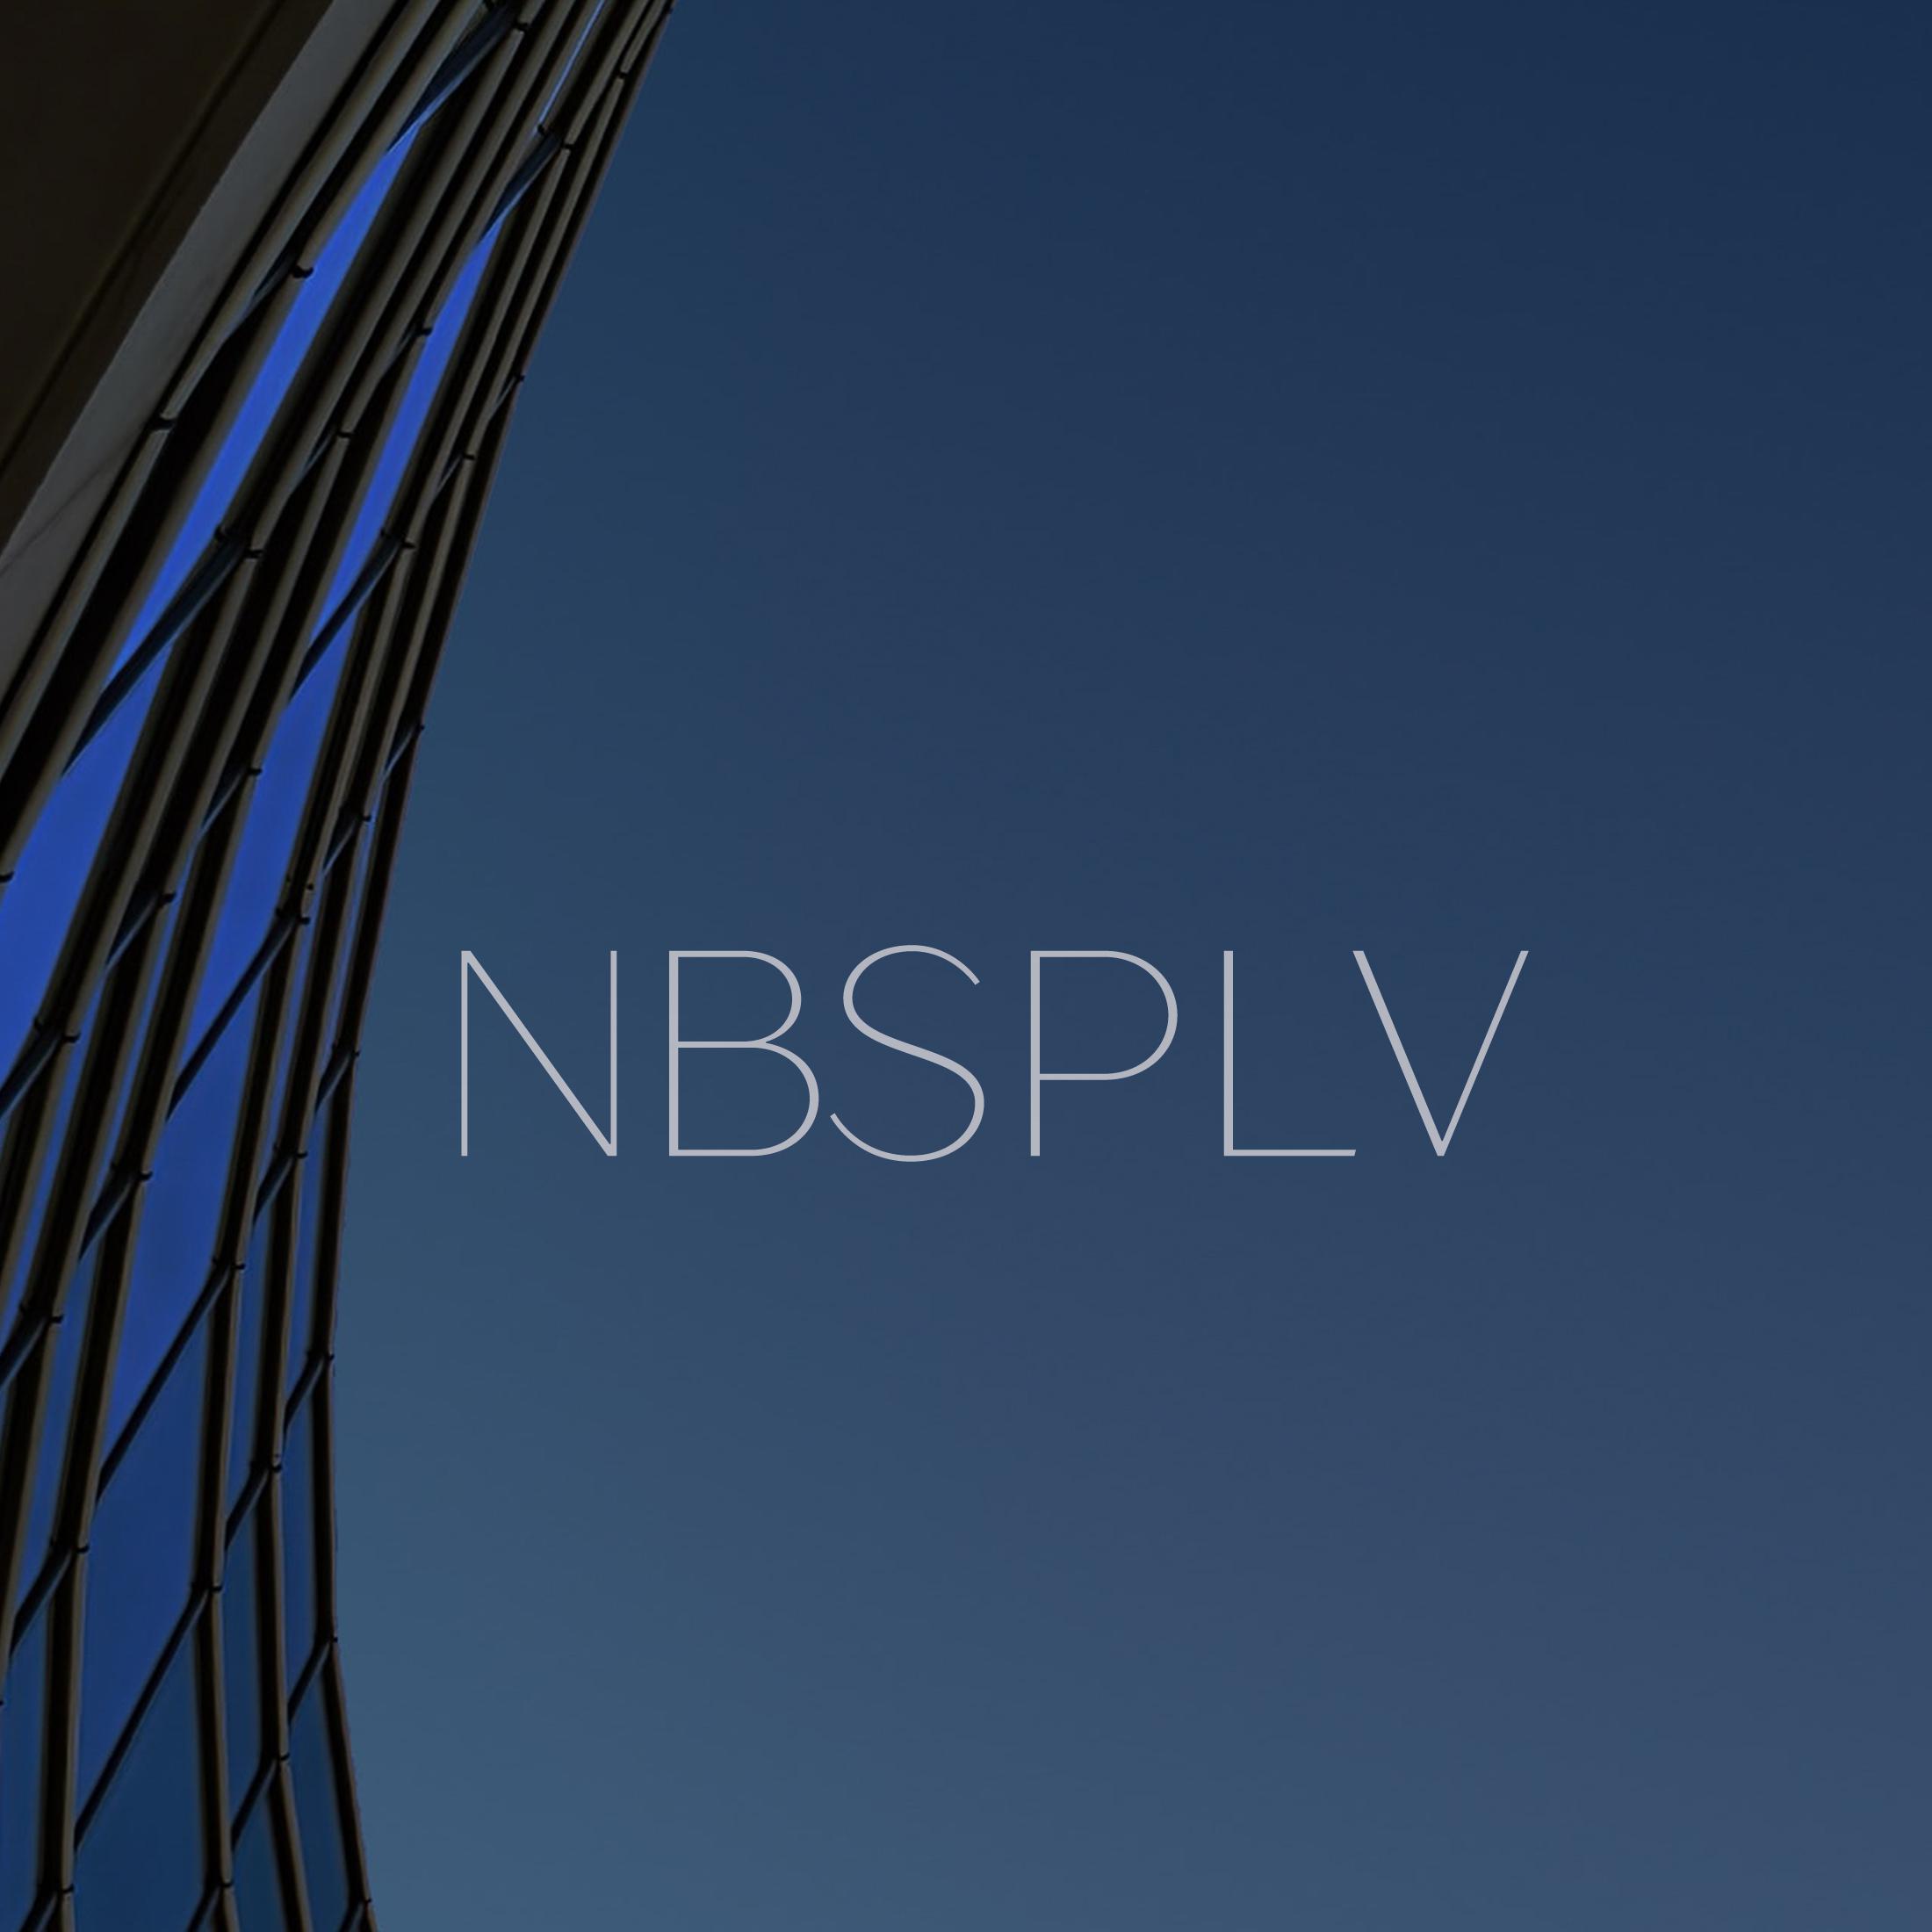 NBSPLV - Passing Day